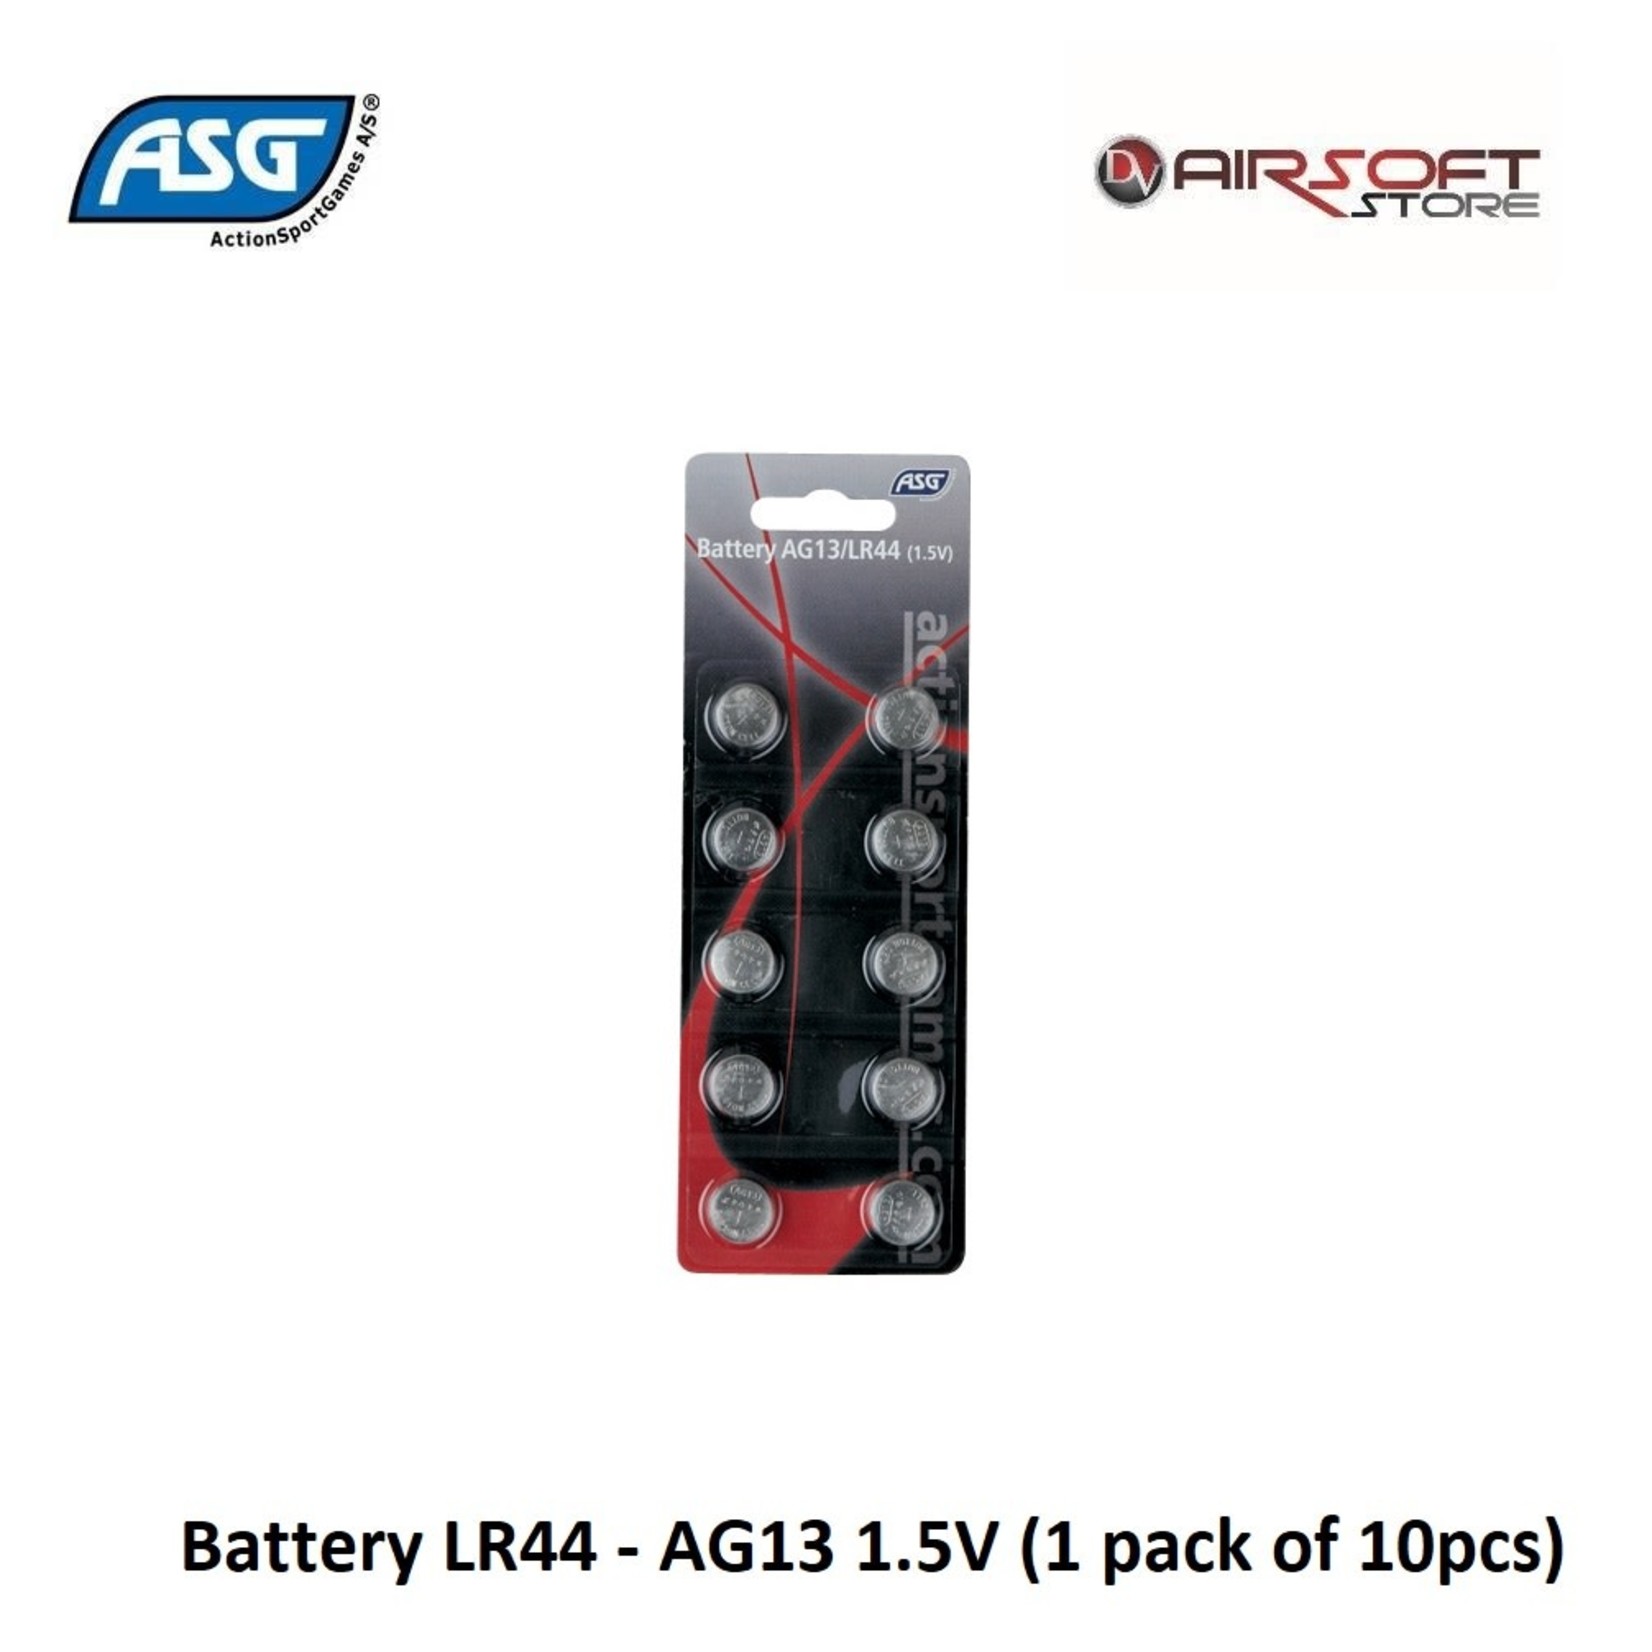 1.5 volt battery ag13 lr44